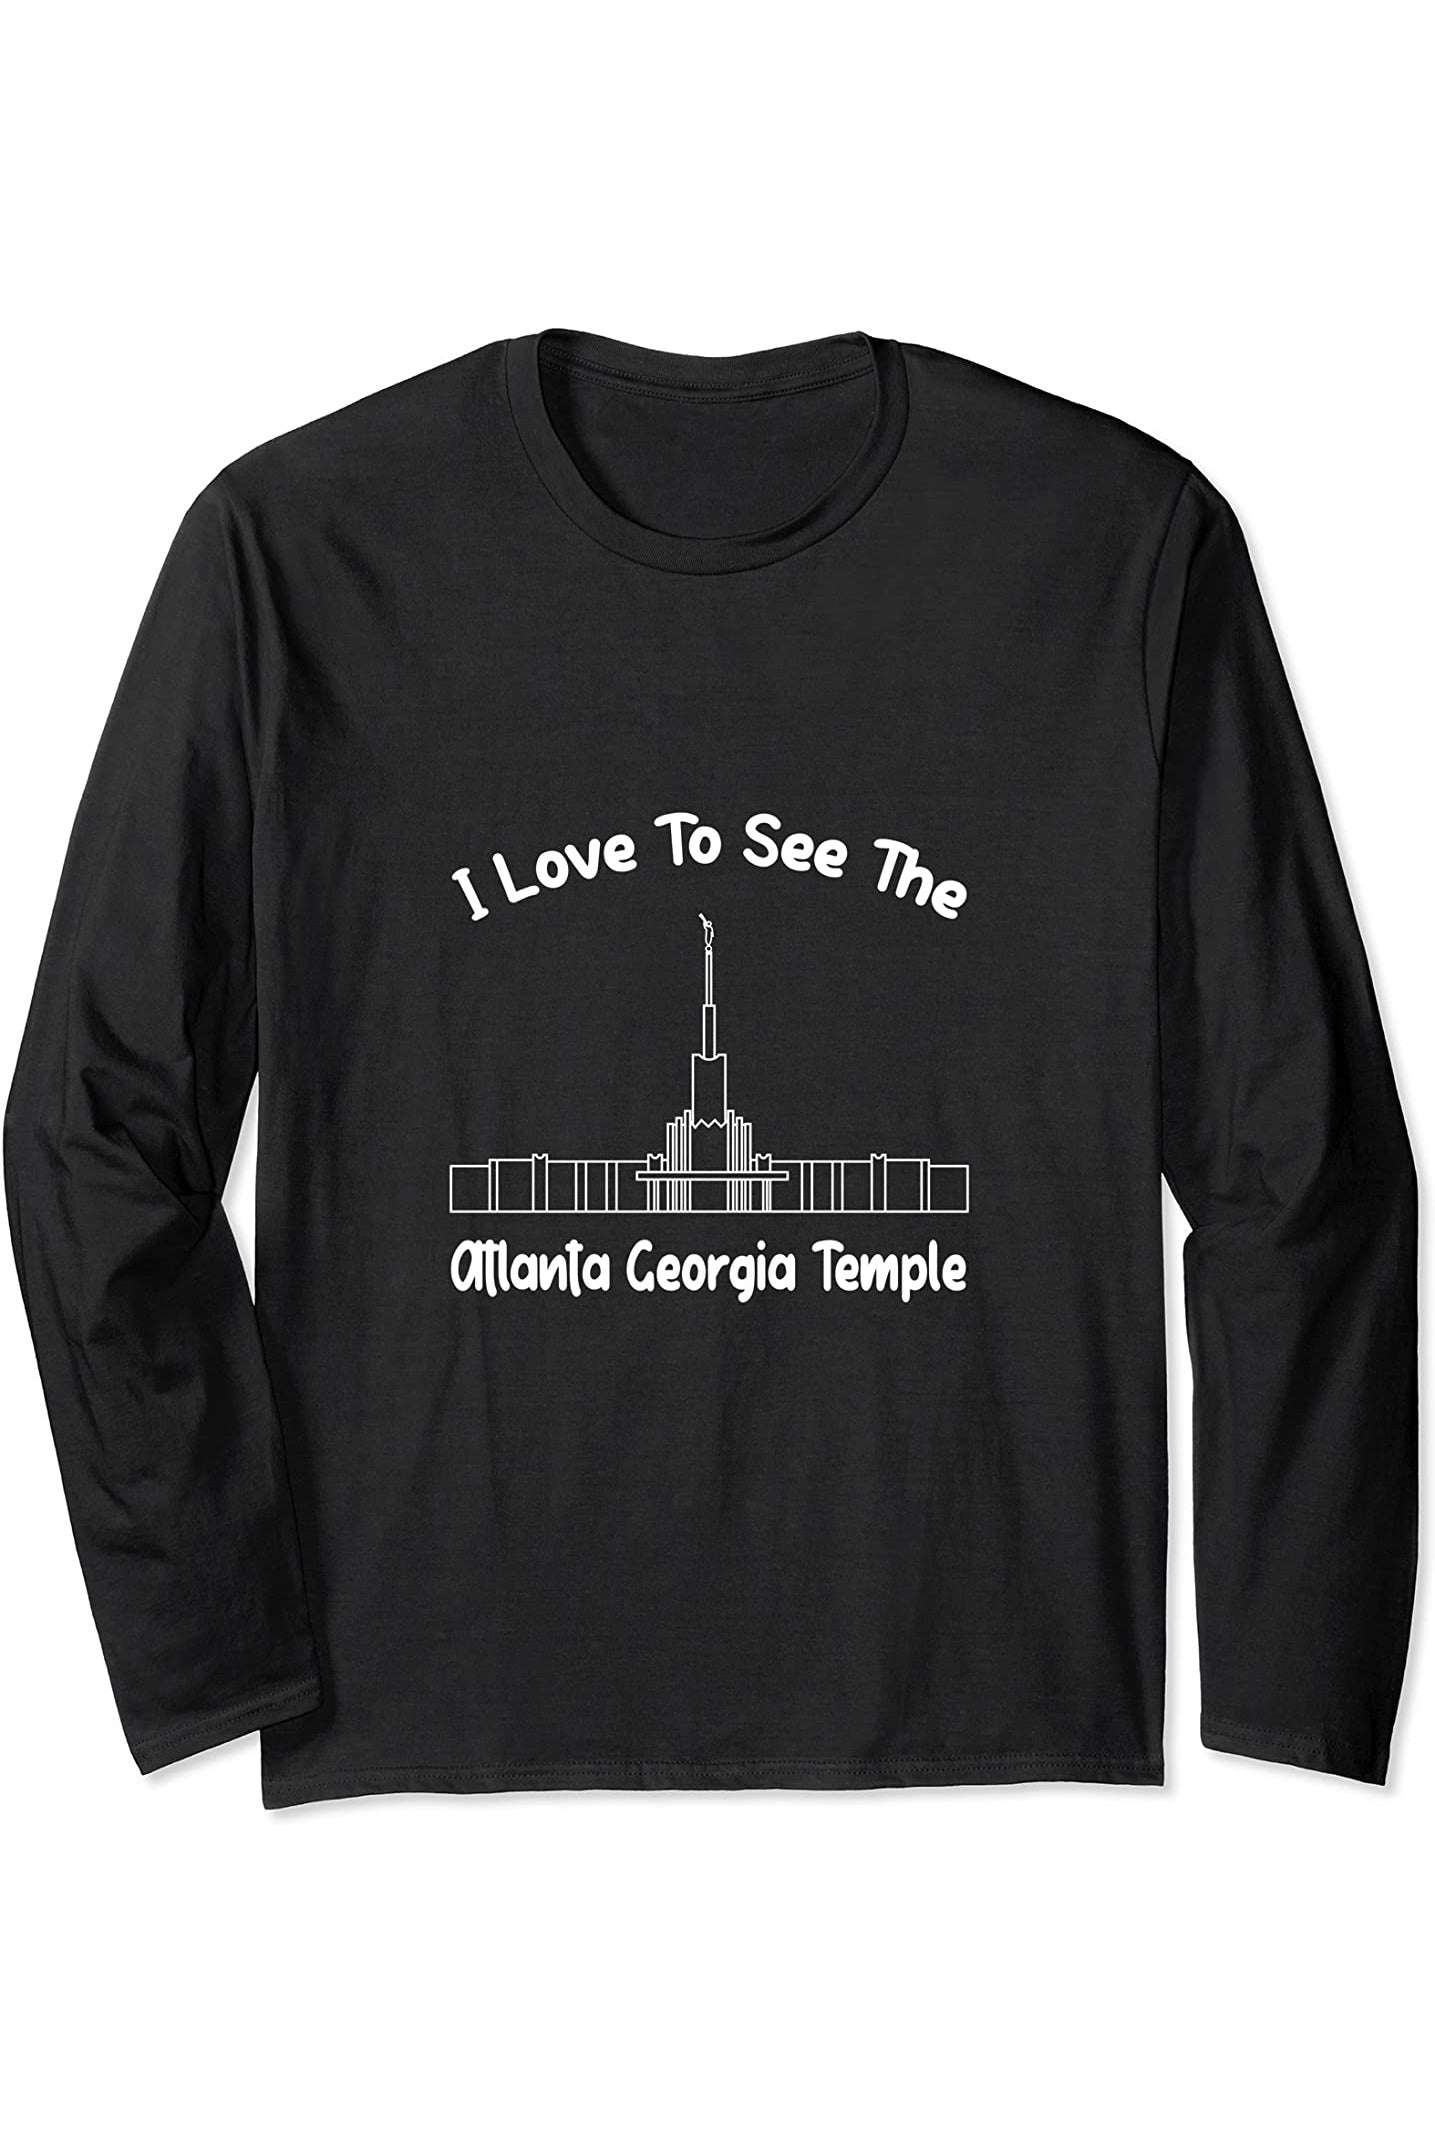 Atlanta Georgia Temple Long Sleeve T-Shirt - Primary Style (English) US